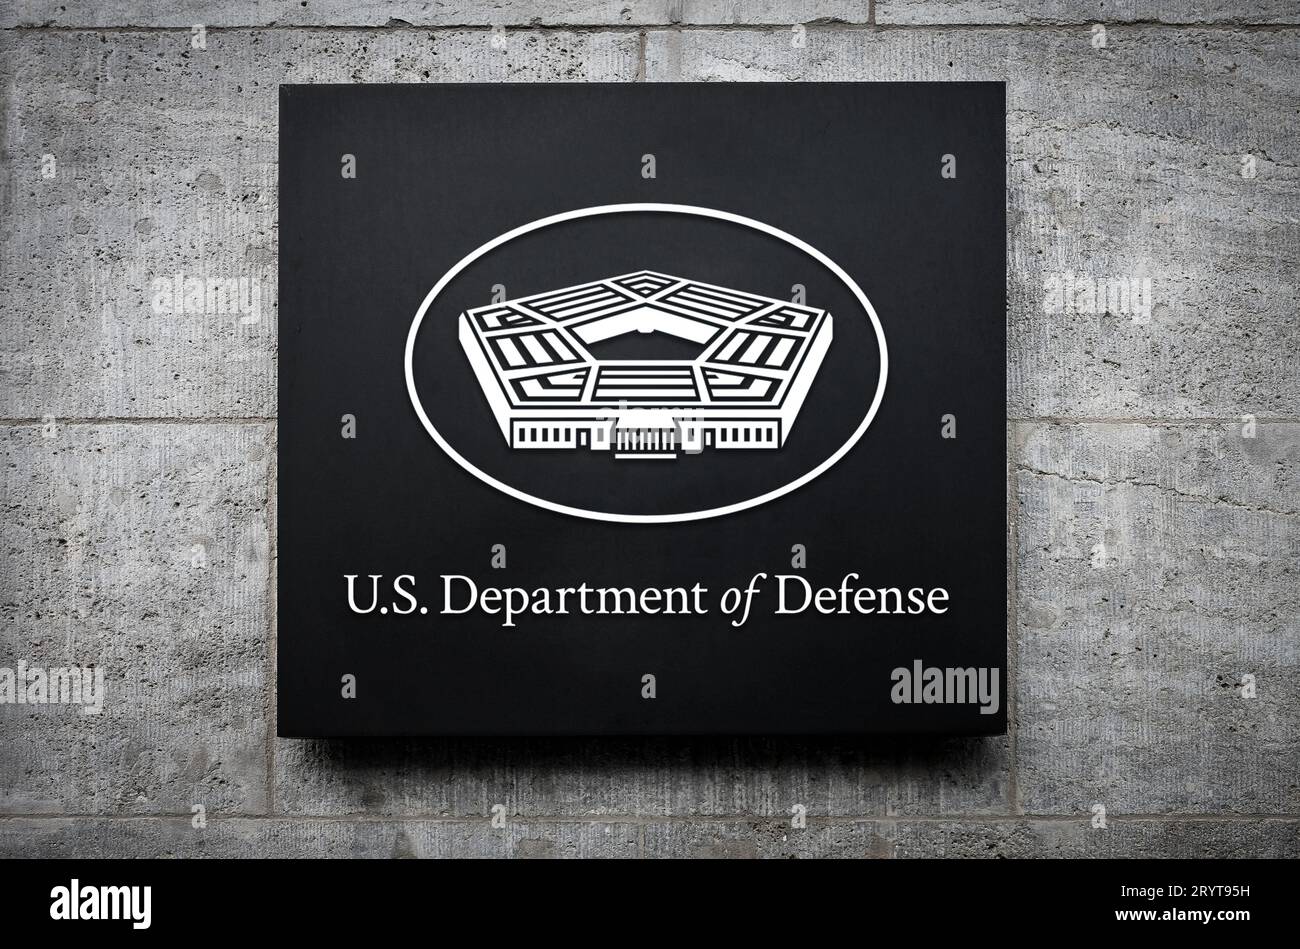 United States Department of Defense headquarter logo Stock Photo